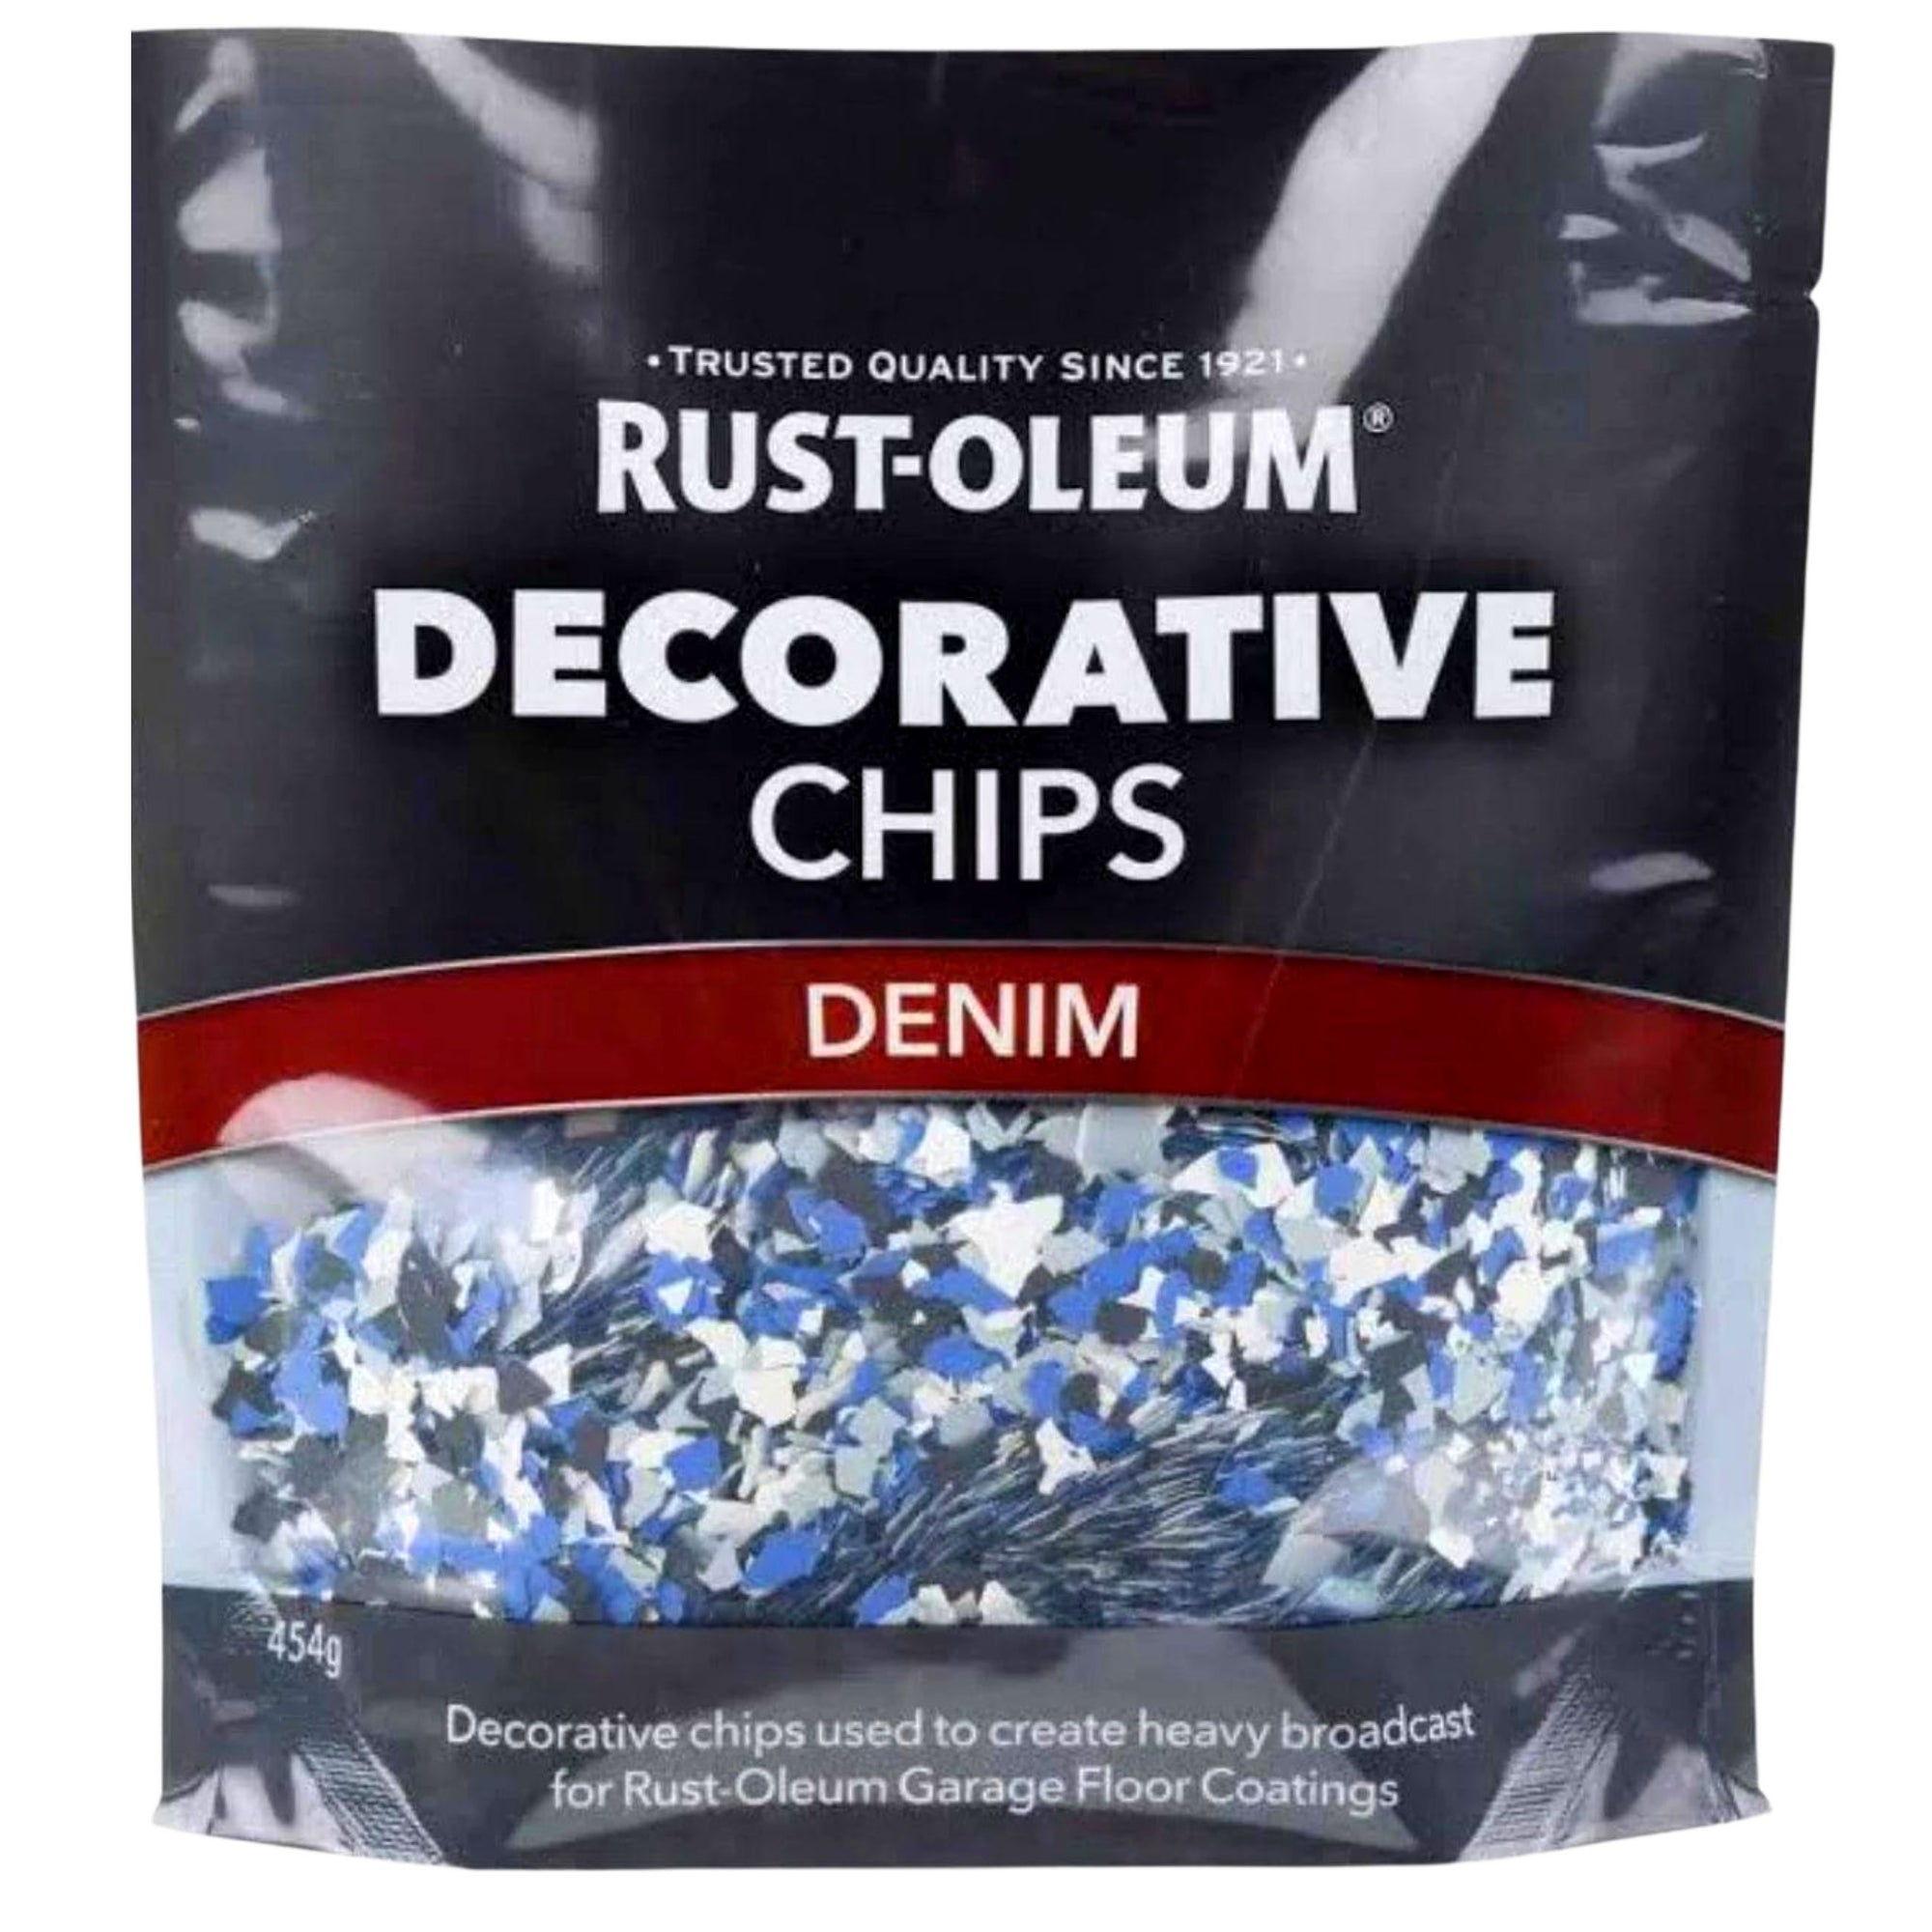 Rustoleum Denim Garage Floor Decorative Chips -454g - South East Clearance Centre